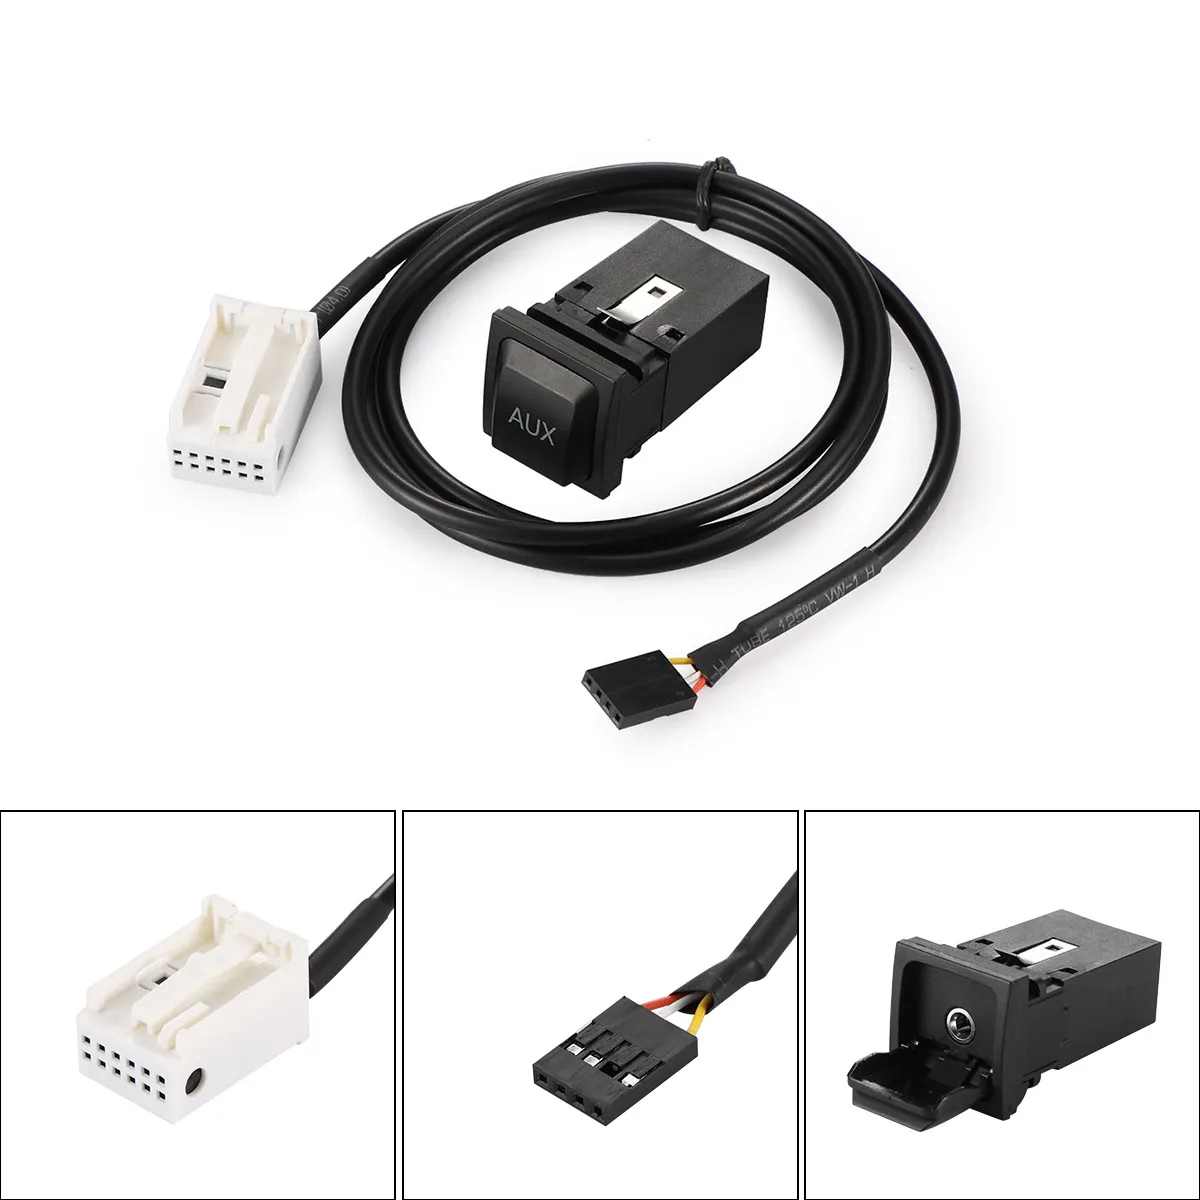 

Car USB AUX Audio Input Cable Adapter Plug Kit for Passat B6 B7 CC Touran